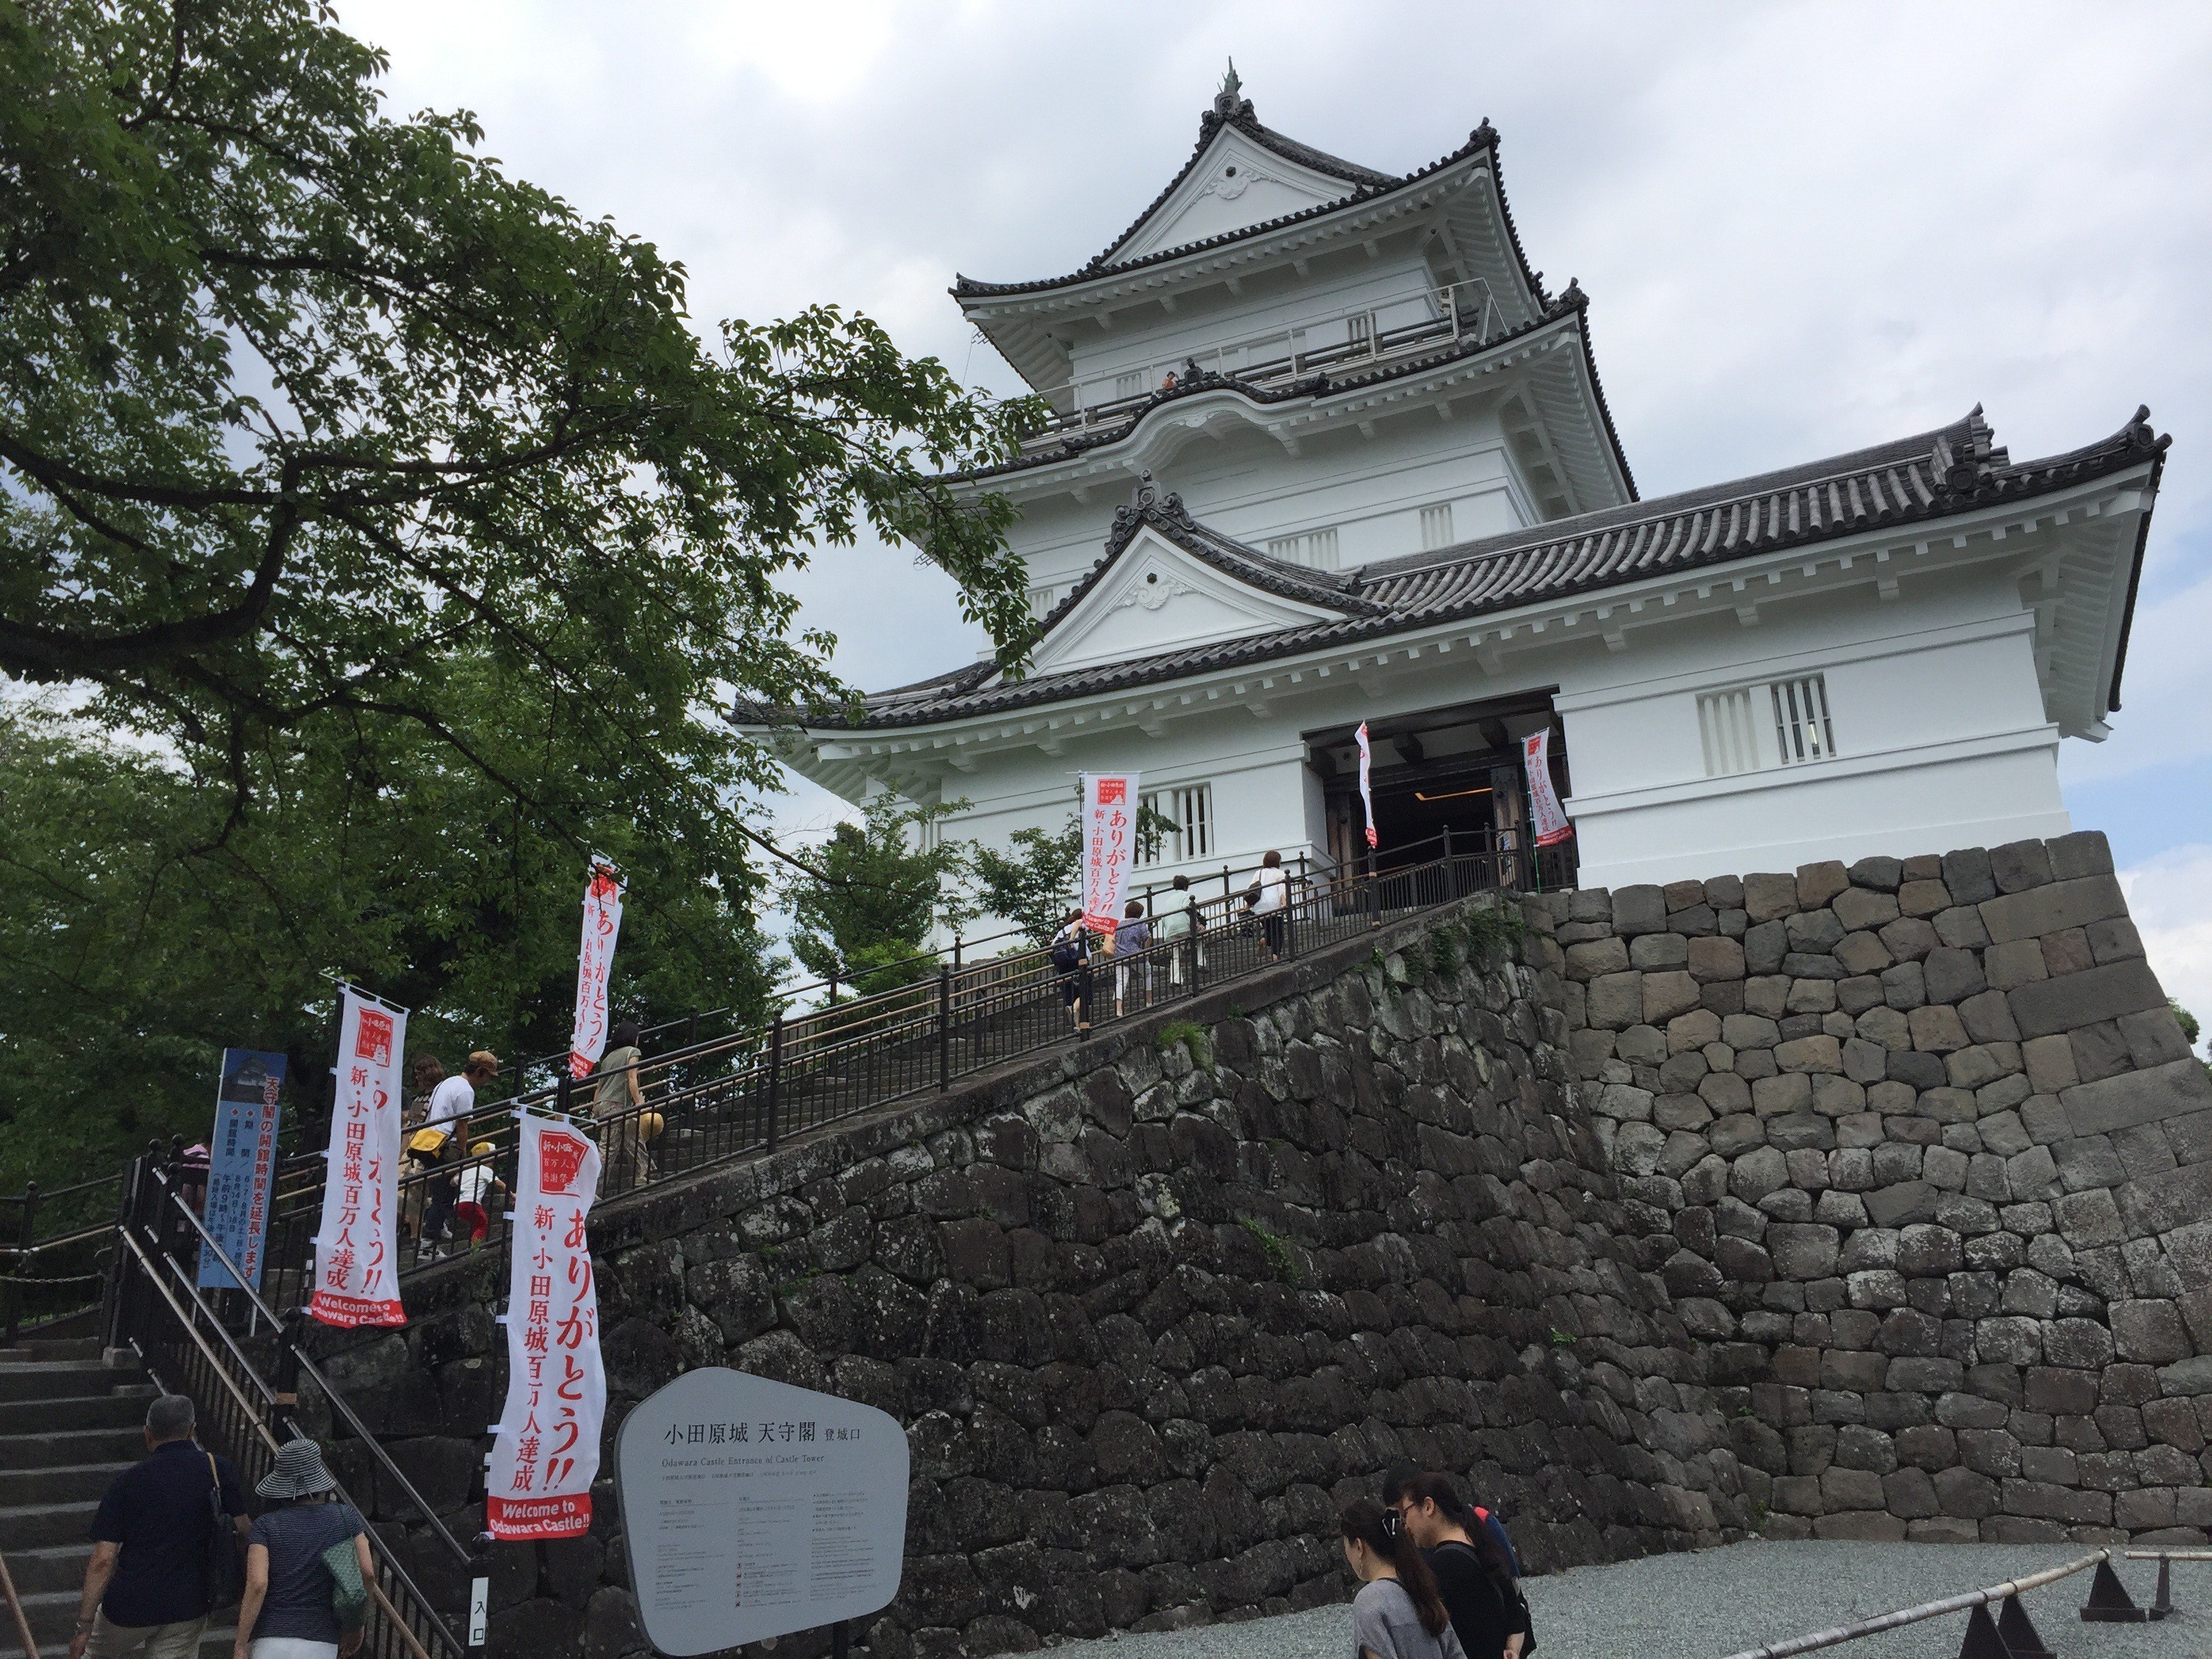 Odawara Castle Kyoto Kanagawa Japan - Planning A Trip To Japan Blog Travel Destinations Review Video 2017 ⚡🔥💥 - Odawara Castle Kyoto Kanagawa Japan